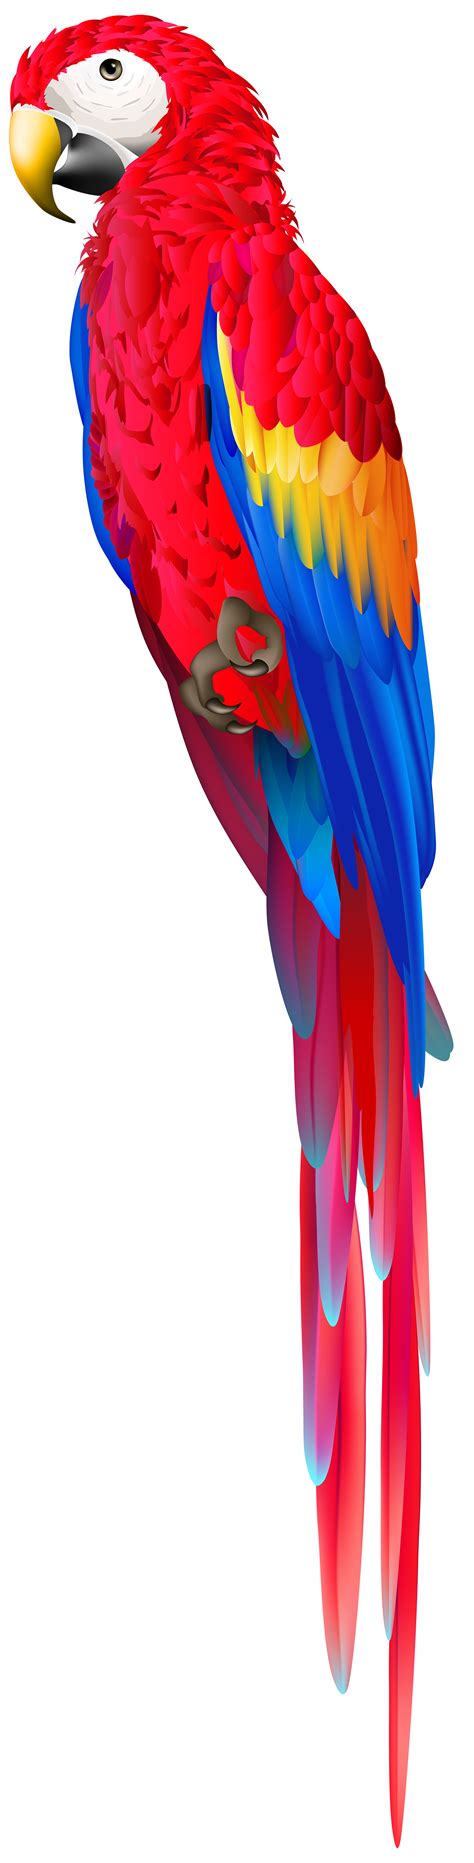 Red Parrot Png Clipart Best Web Clipart Bird Silhouette Art Parrot